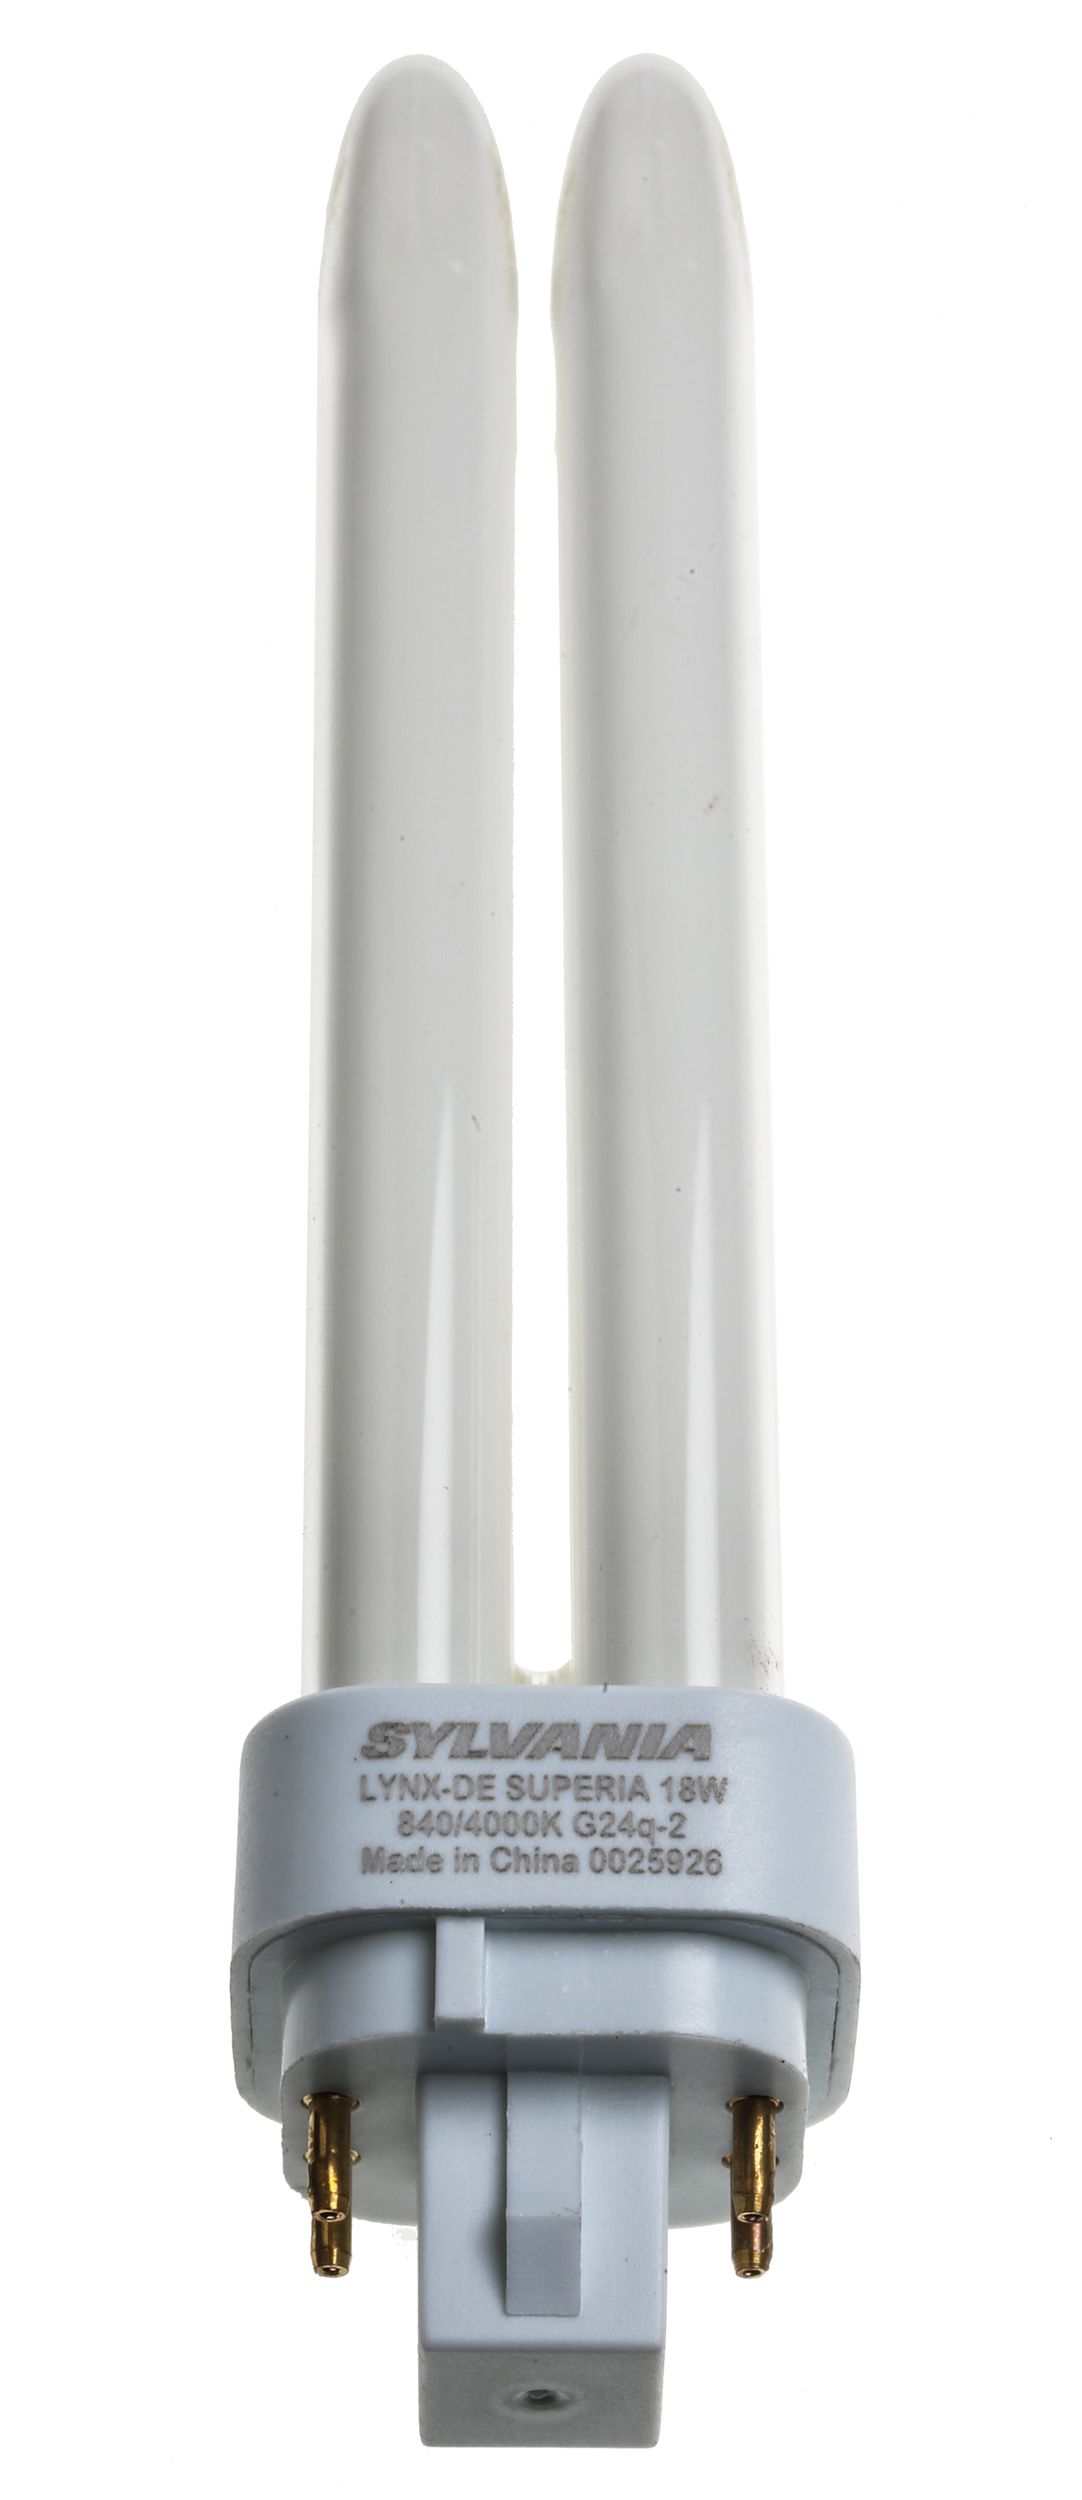 G24q-2 Stick Shape CFL Bulb, 18 W, 4000K, Cool White Colour Tone